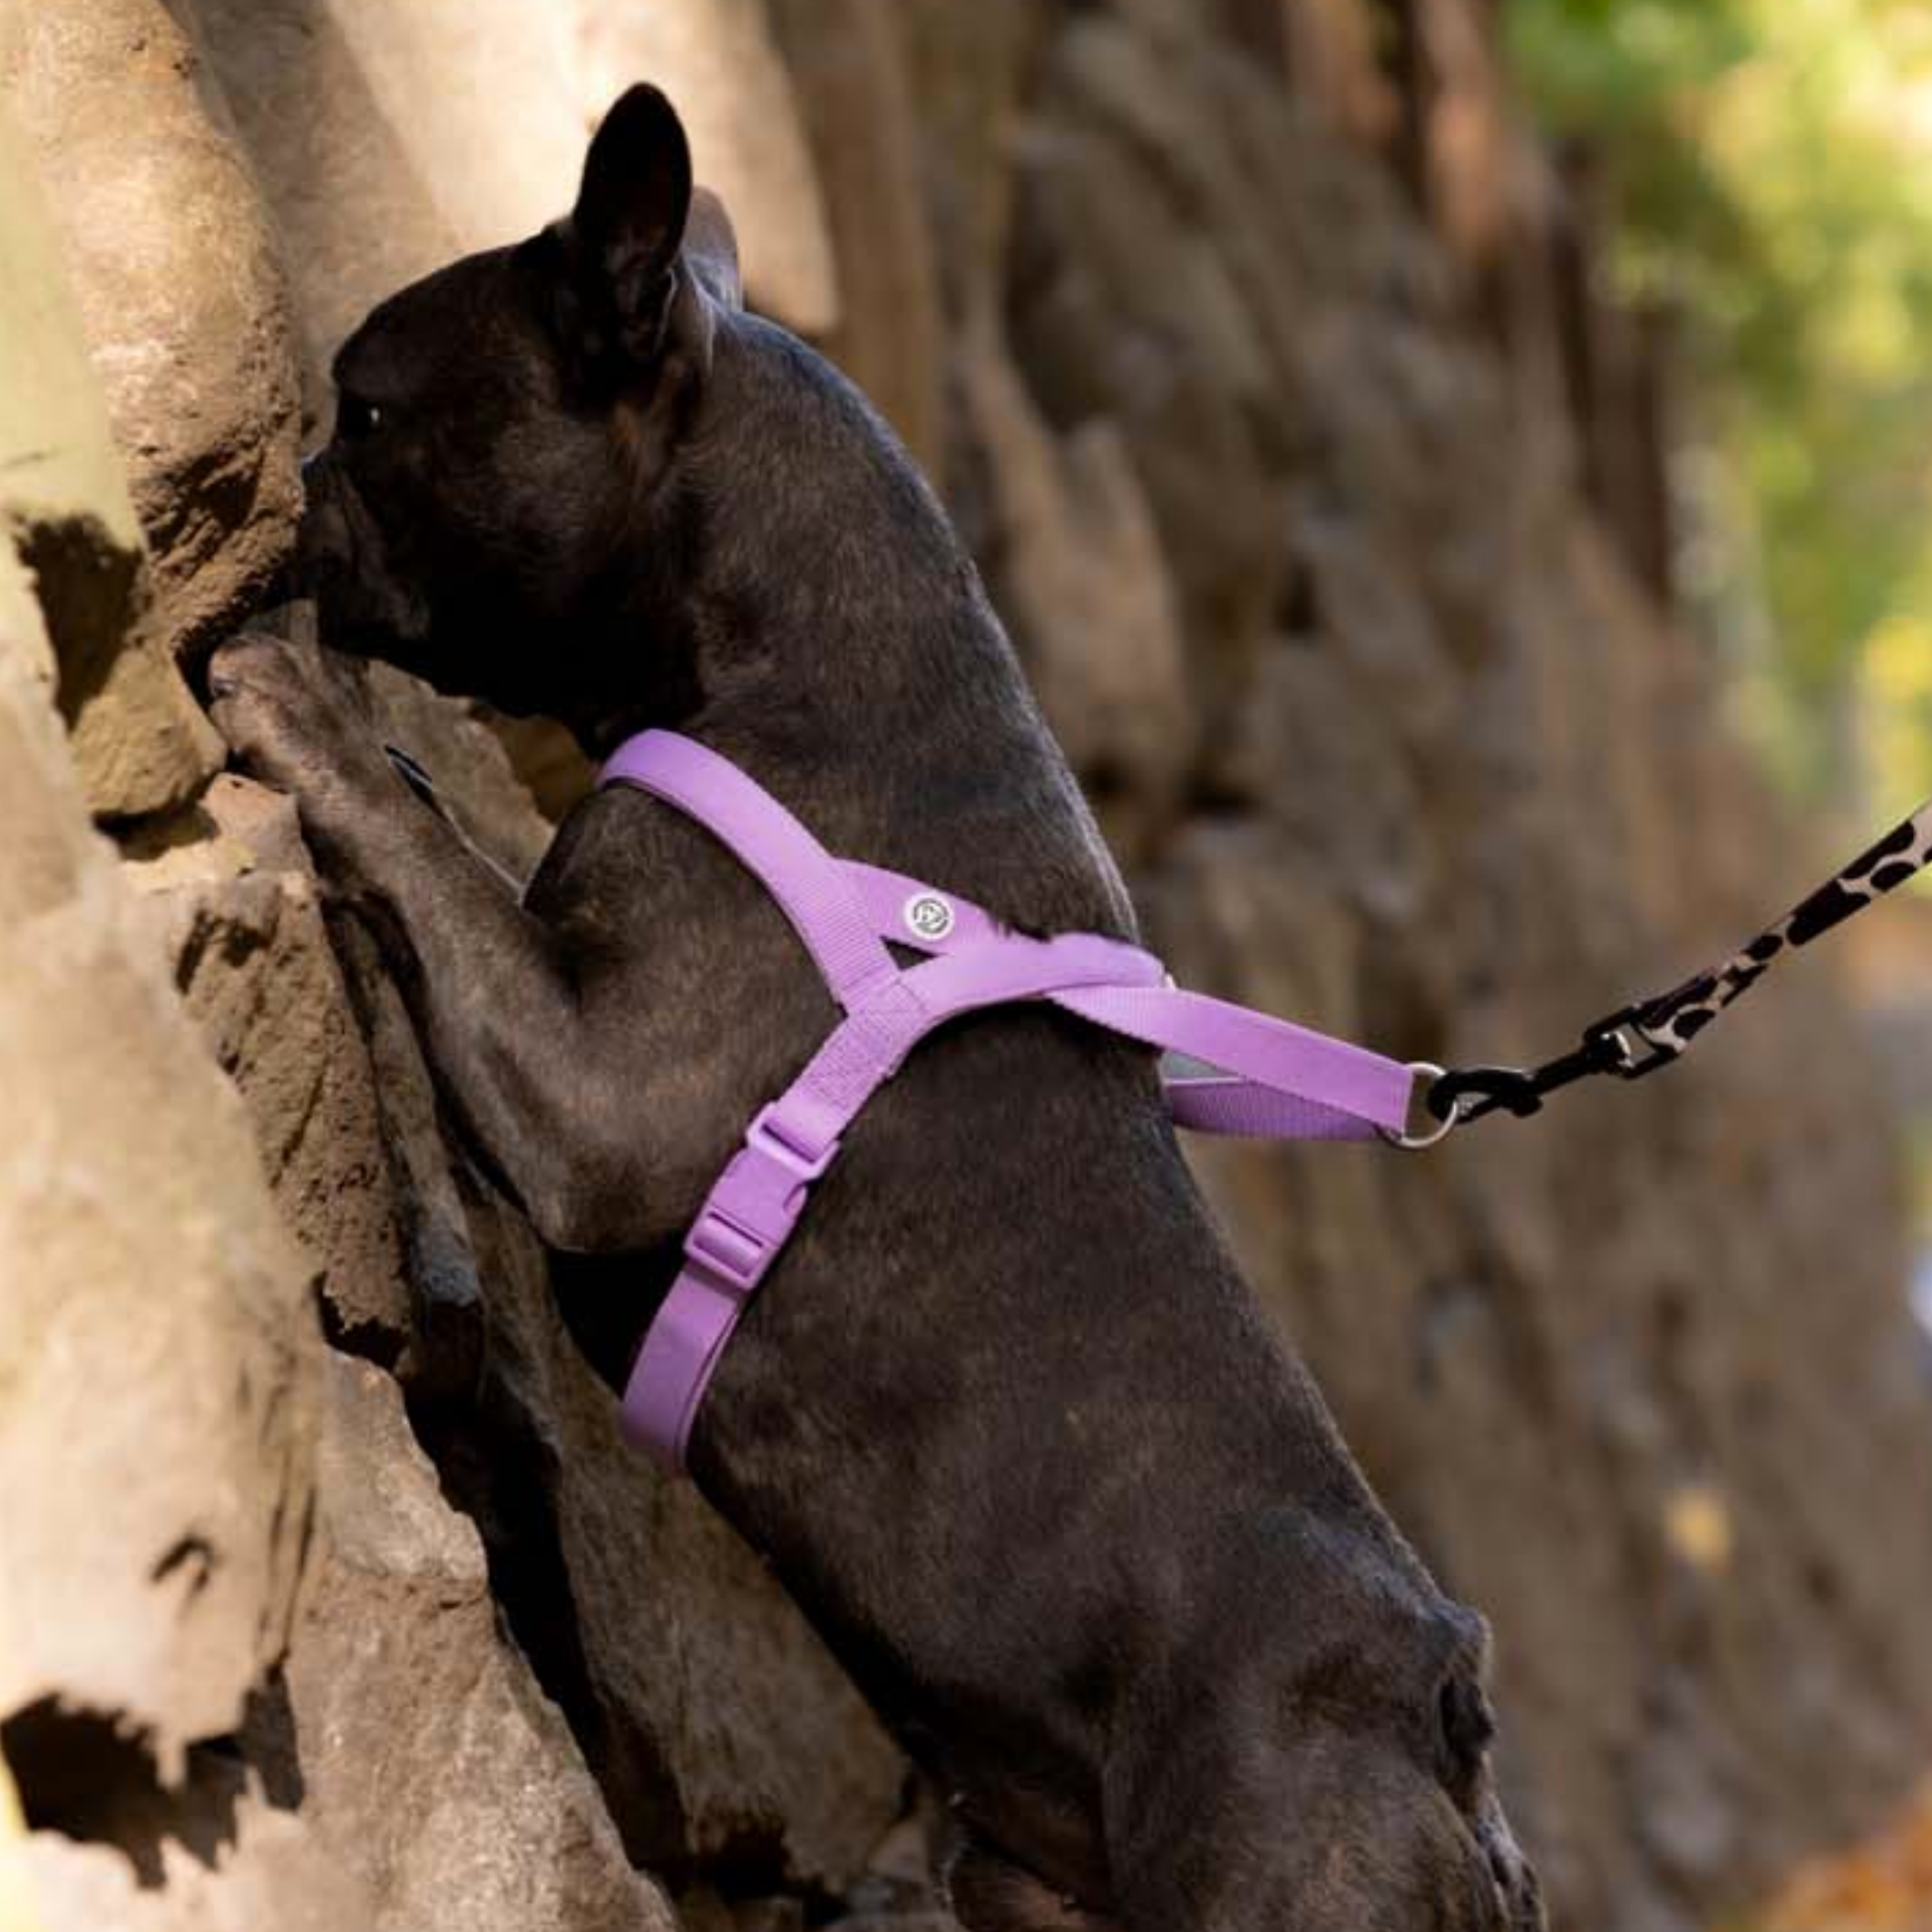 Lilac Dog Harness